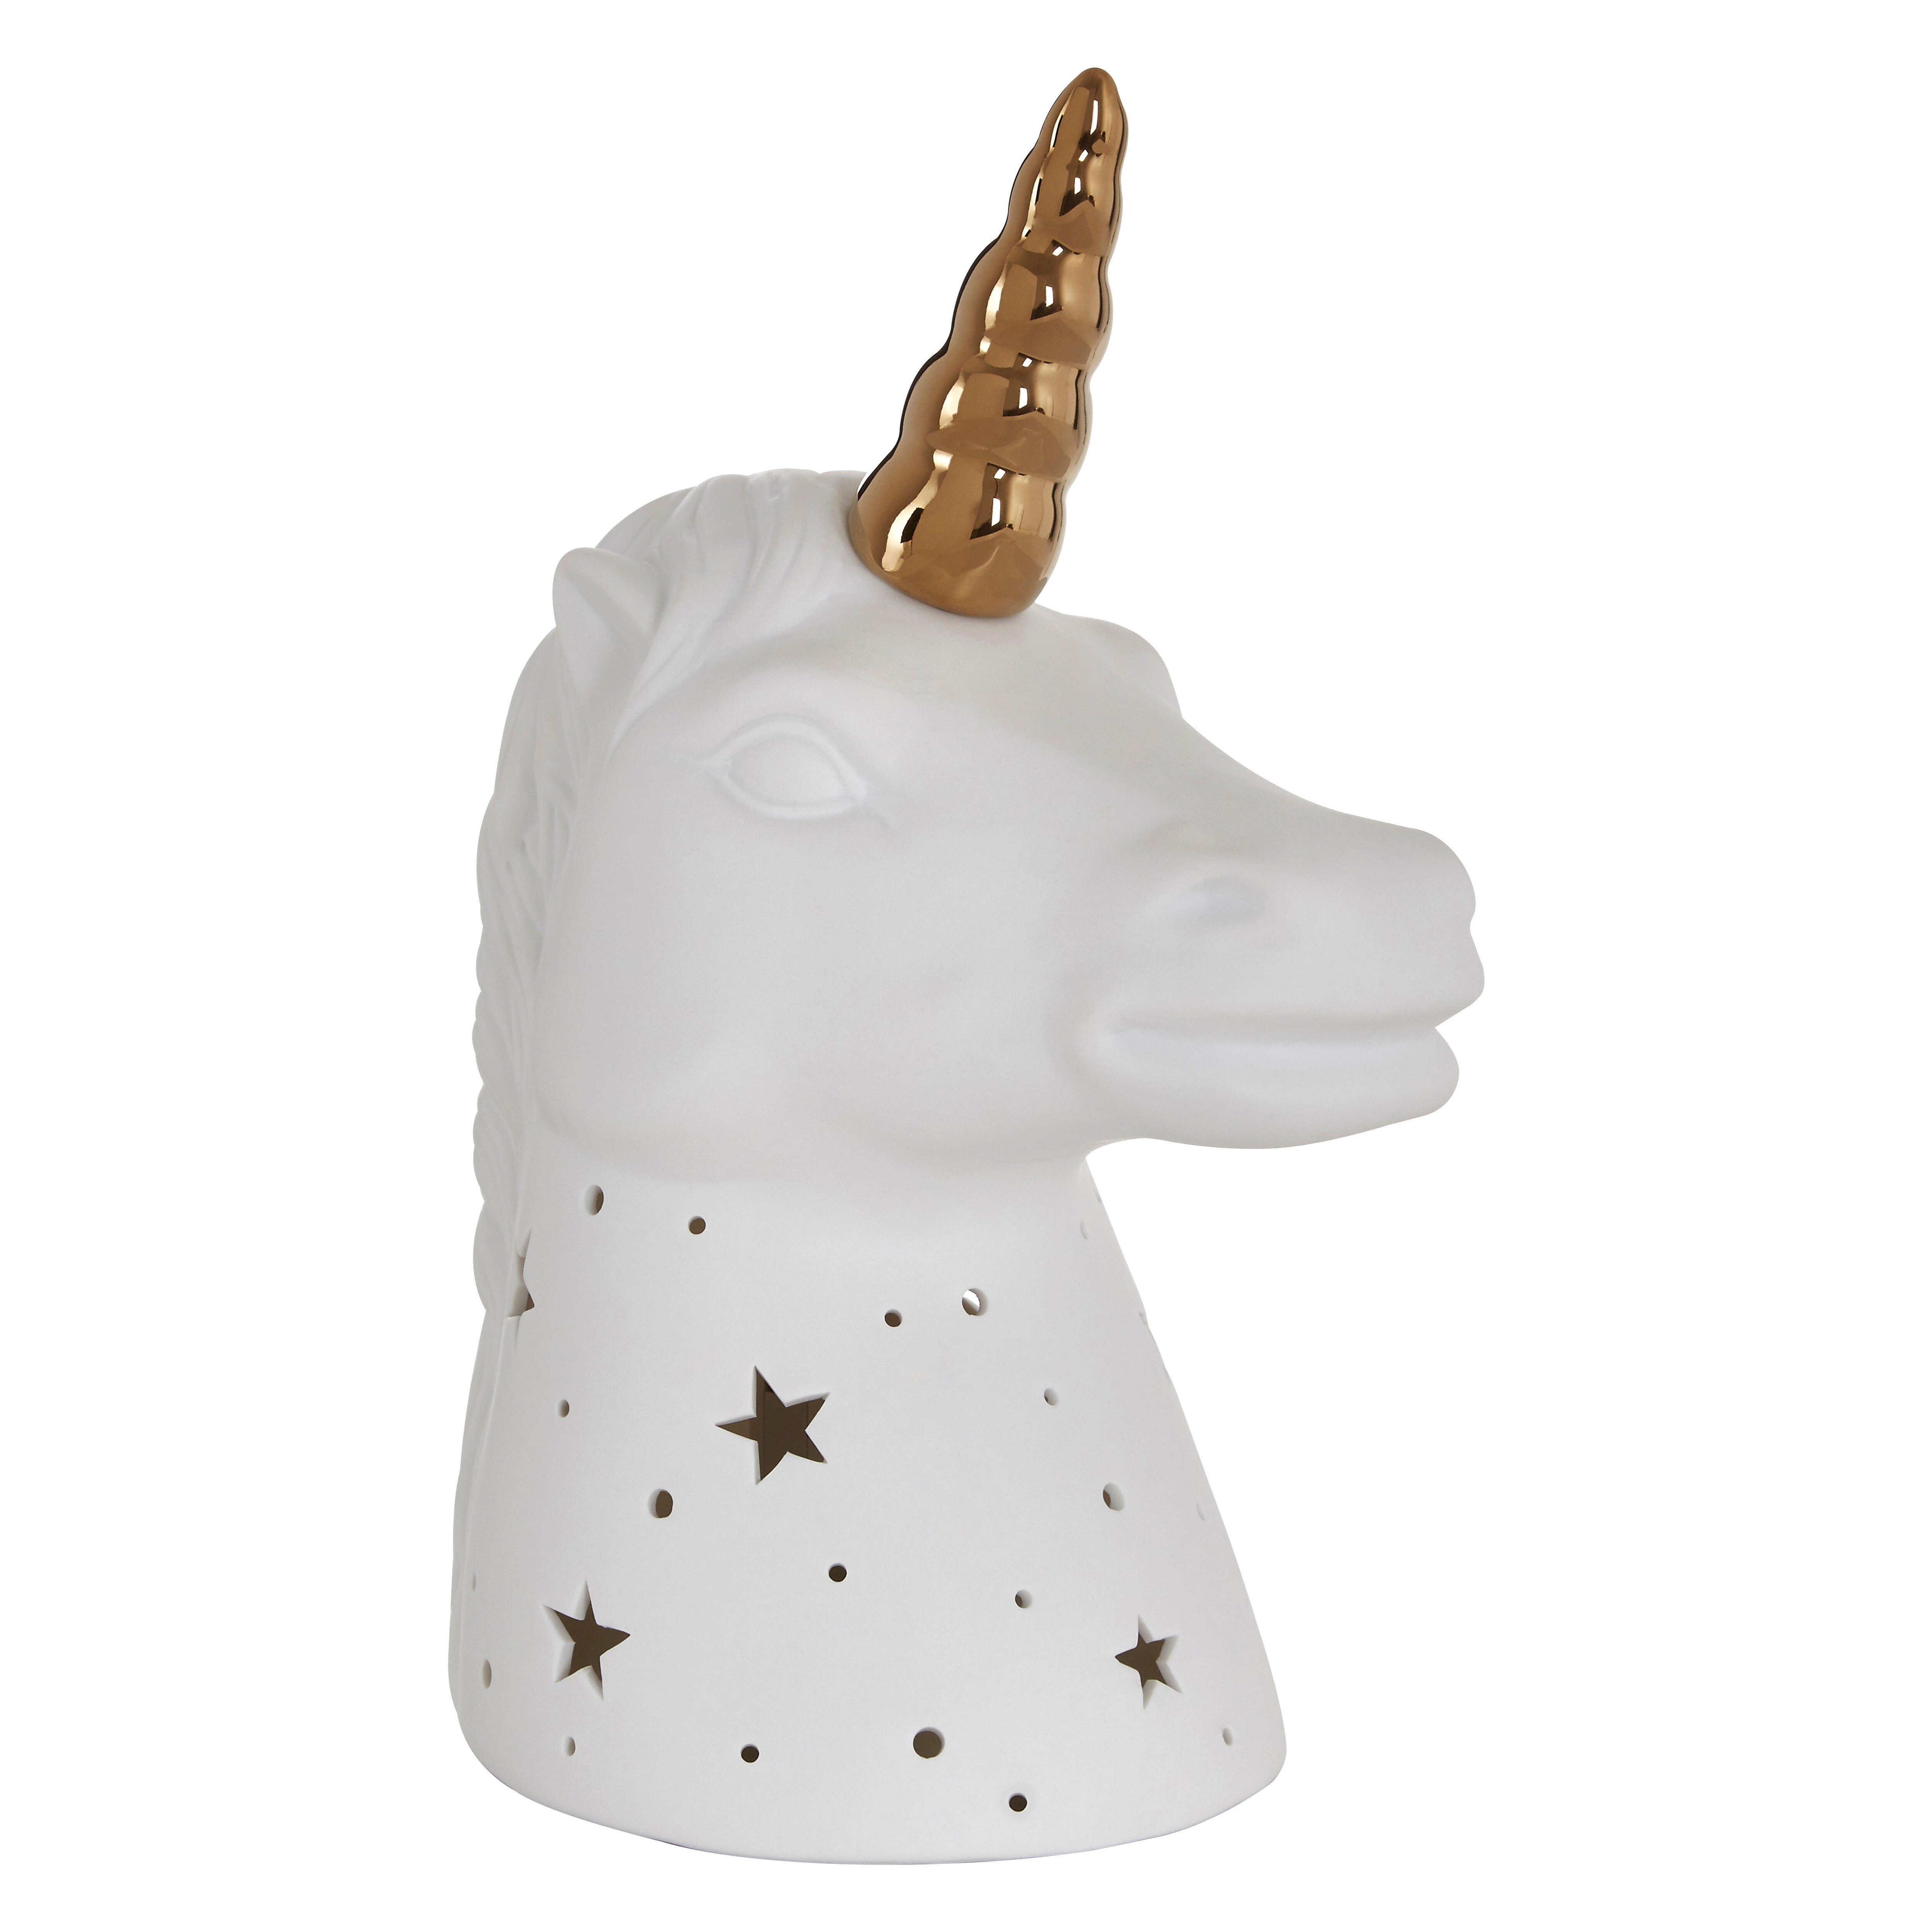 Premier Kids Kids Unicorn with Gold Horn Night Light - image 1